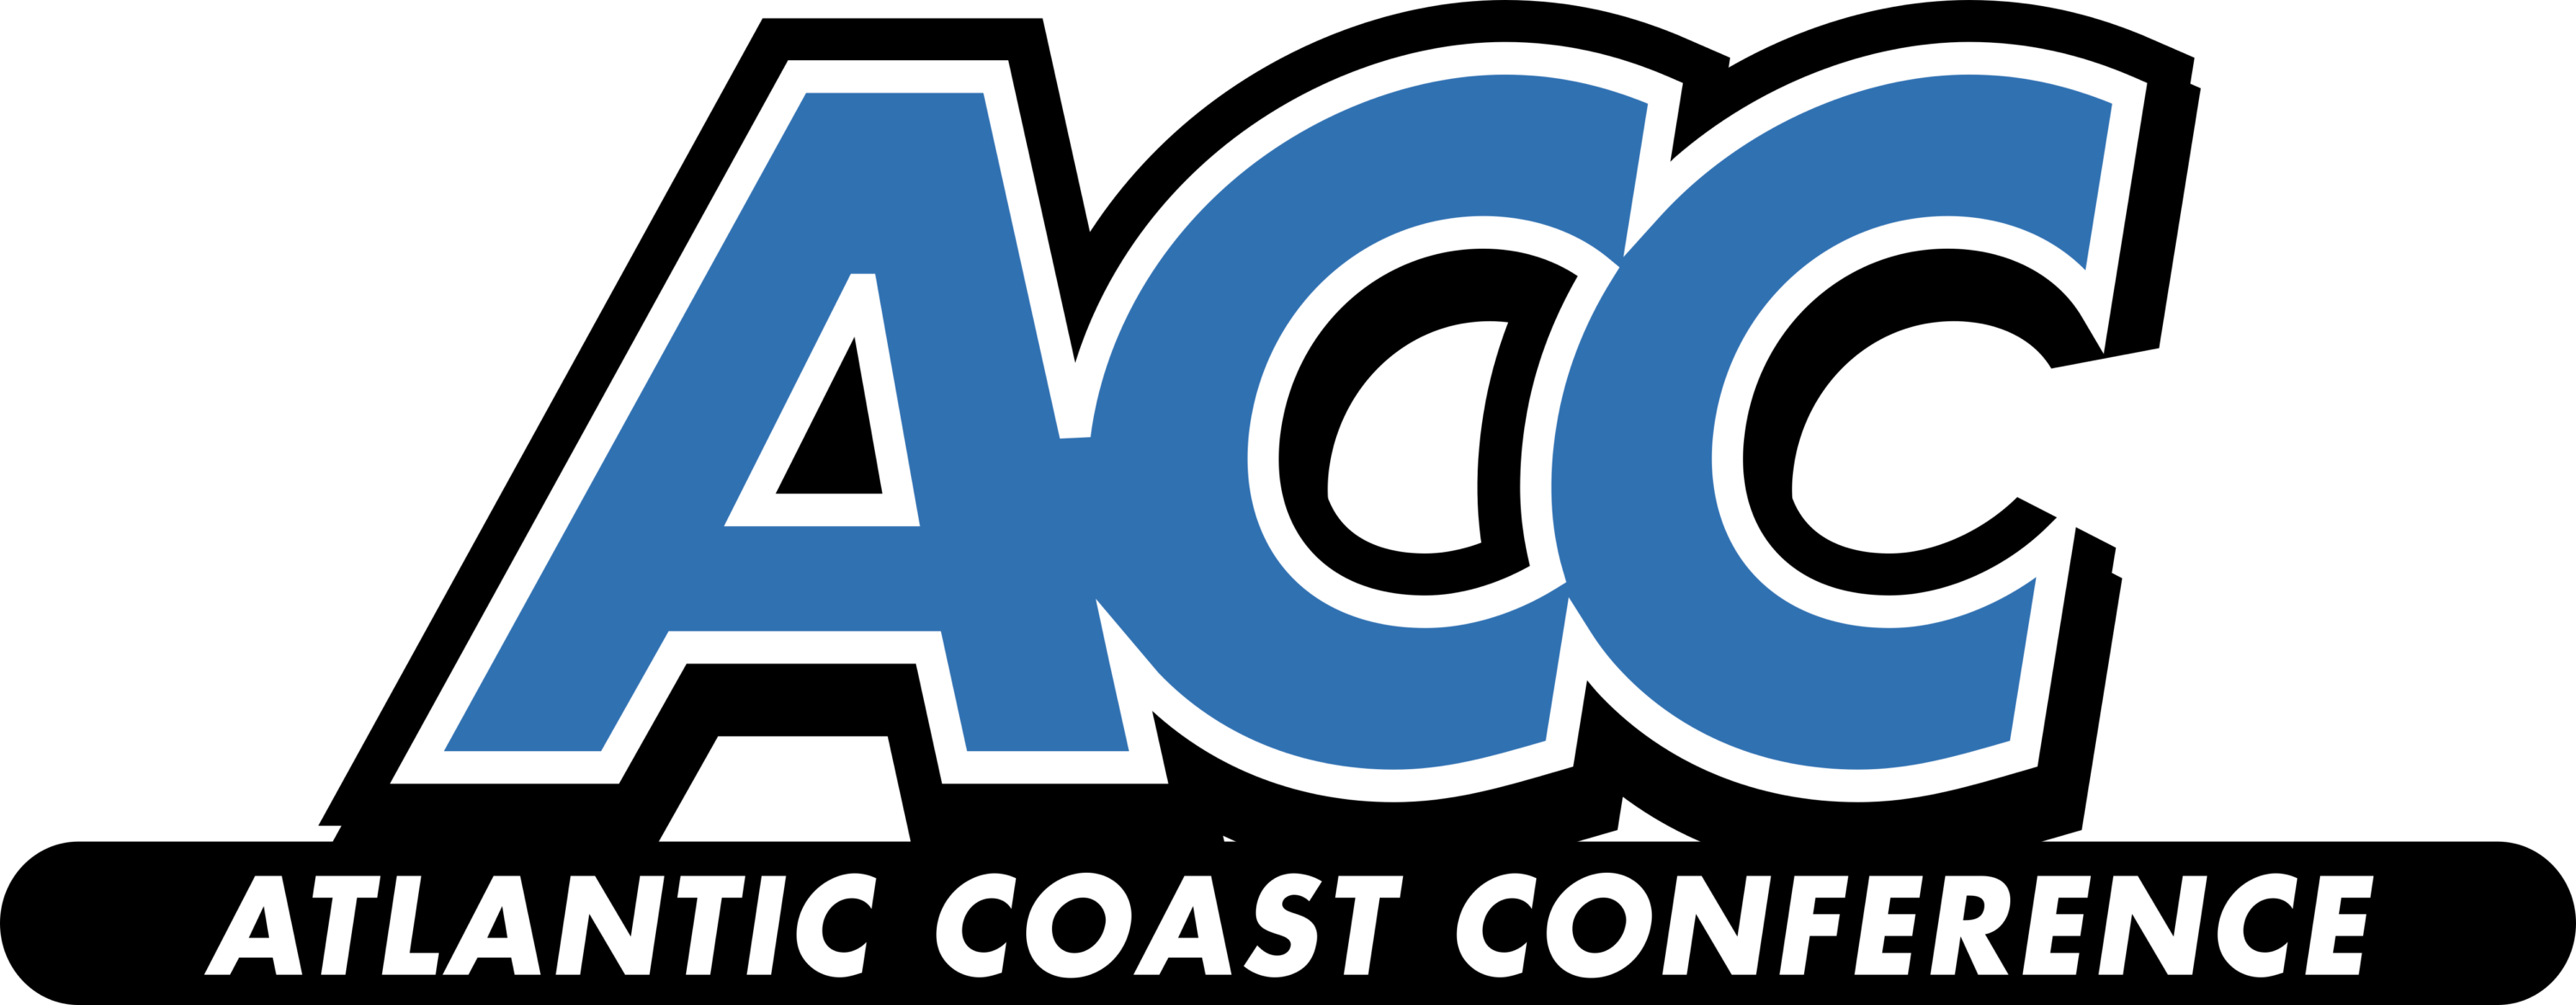 ACC Atlantic Coast Conference Logo old